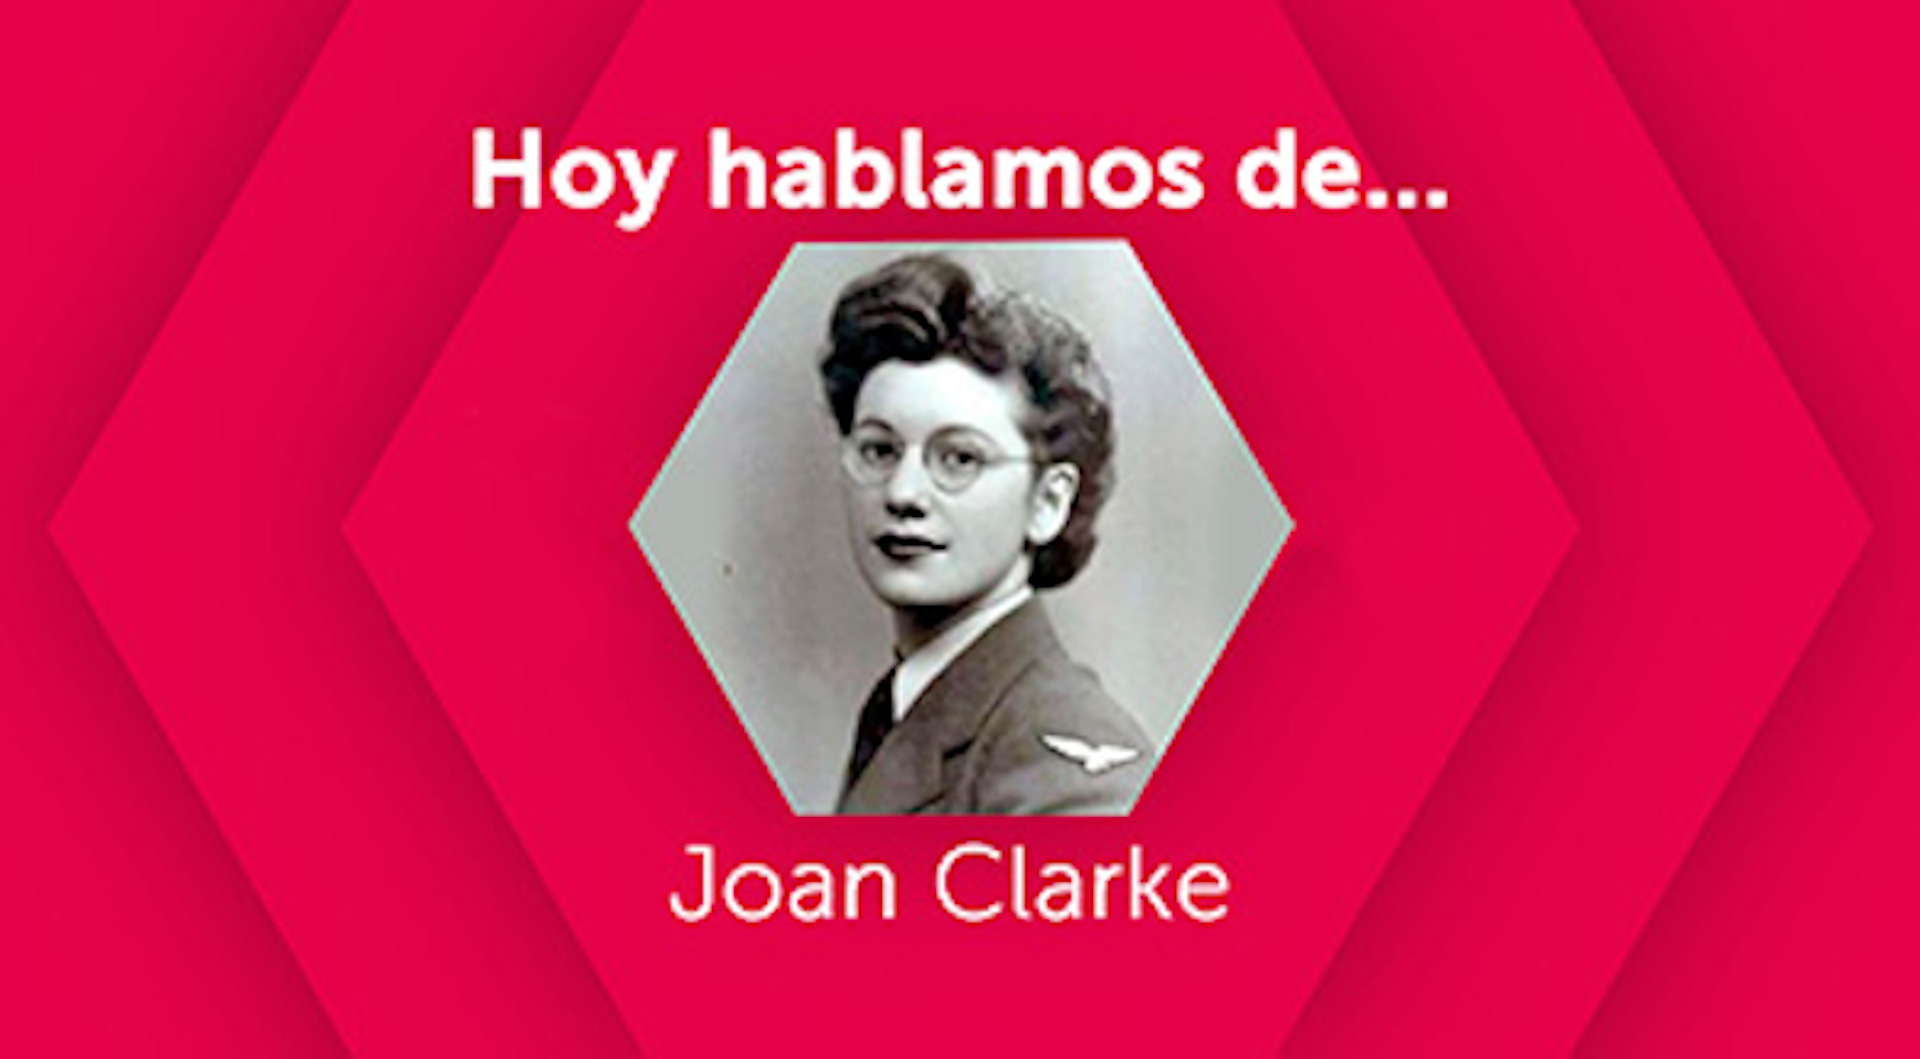 Hoy hablamos de Joan Clarke